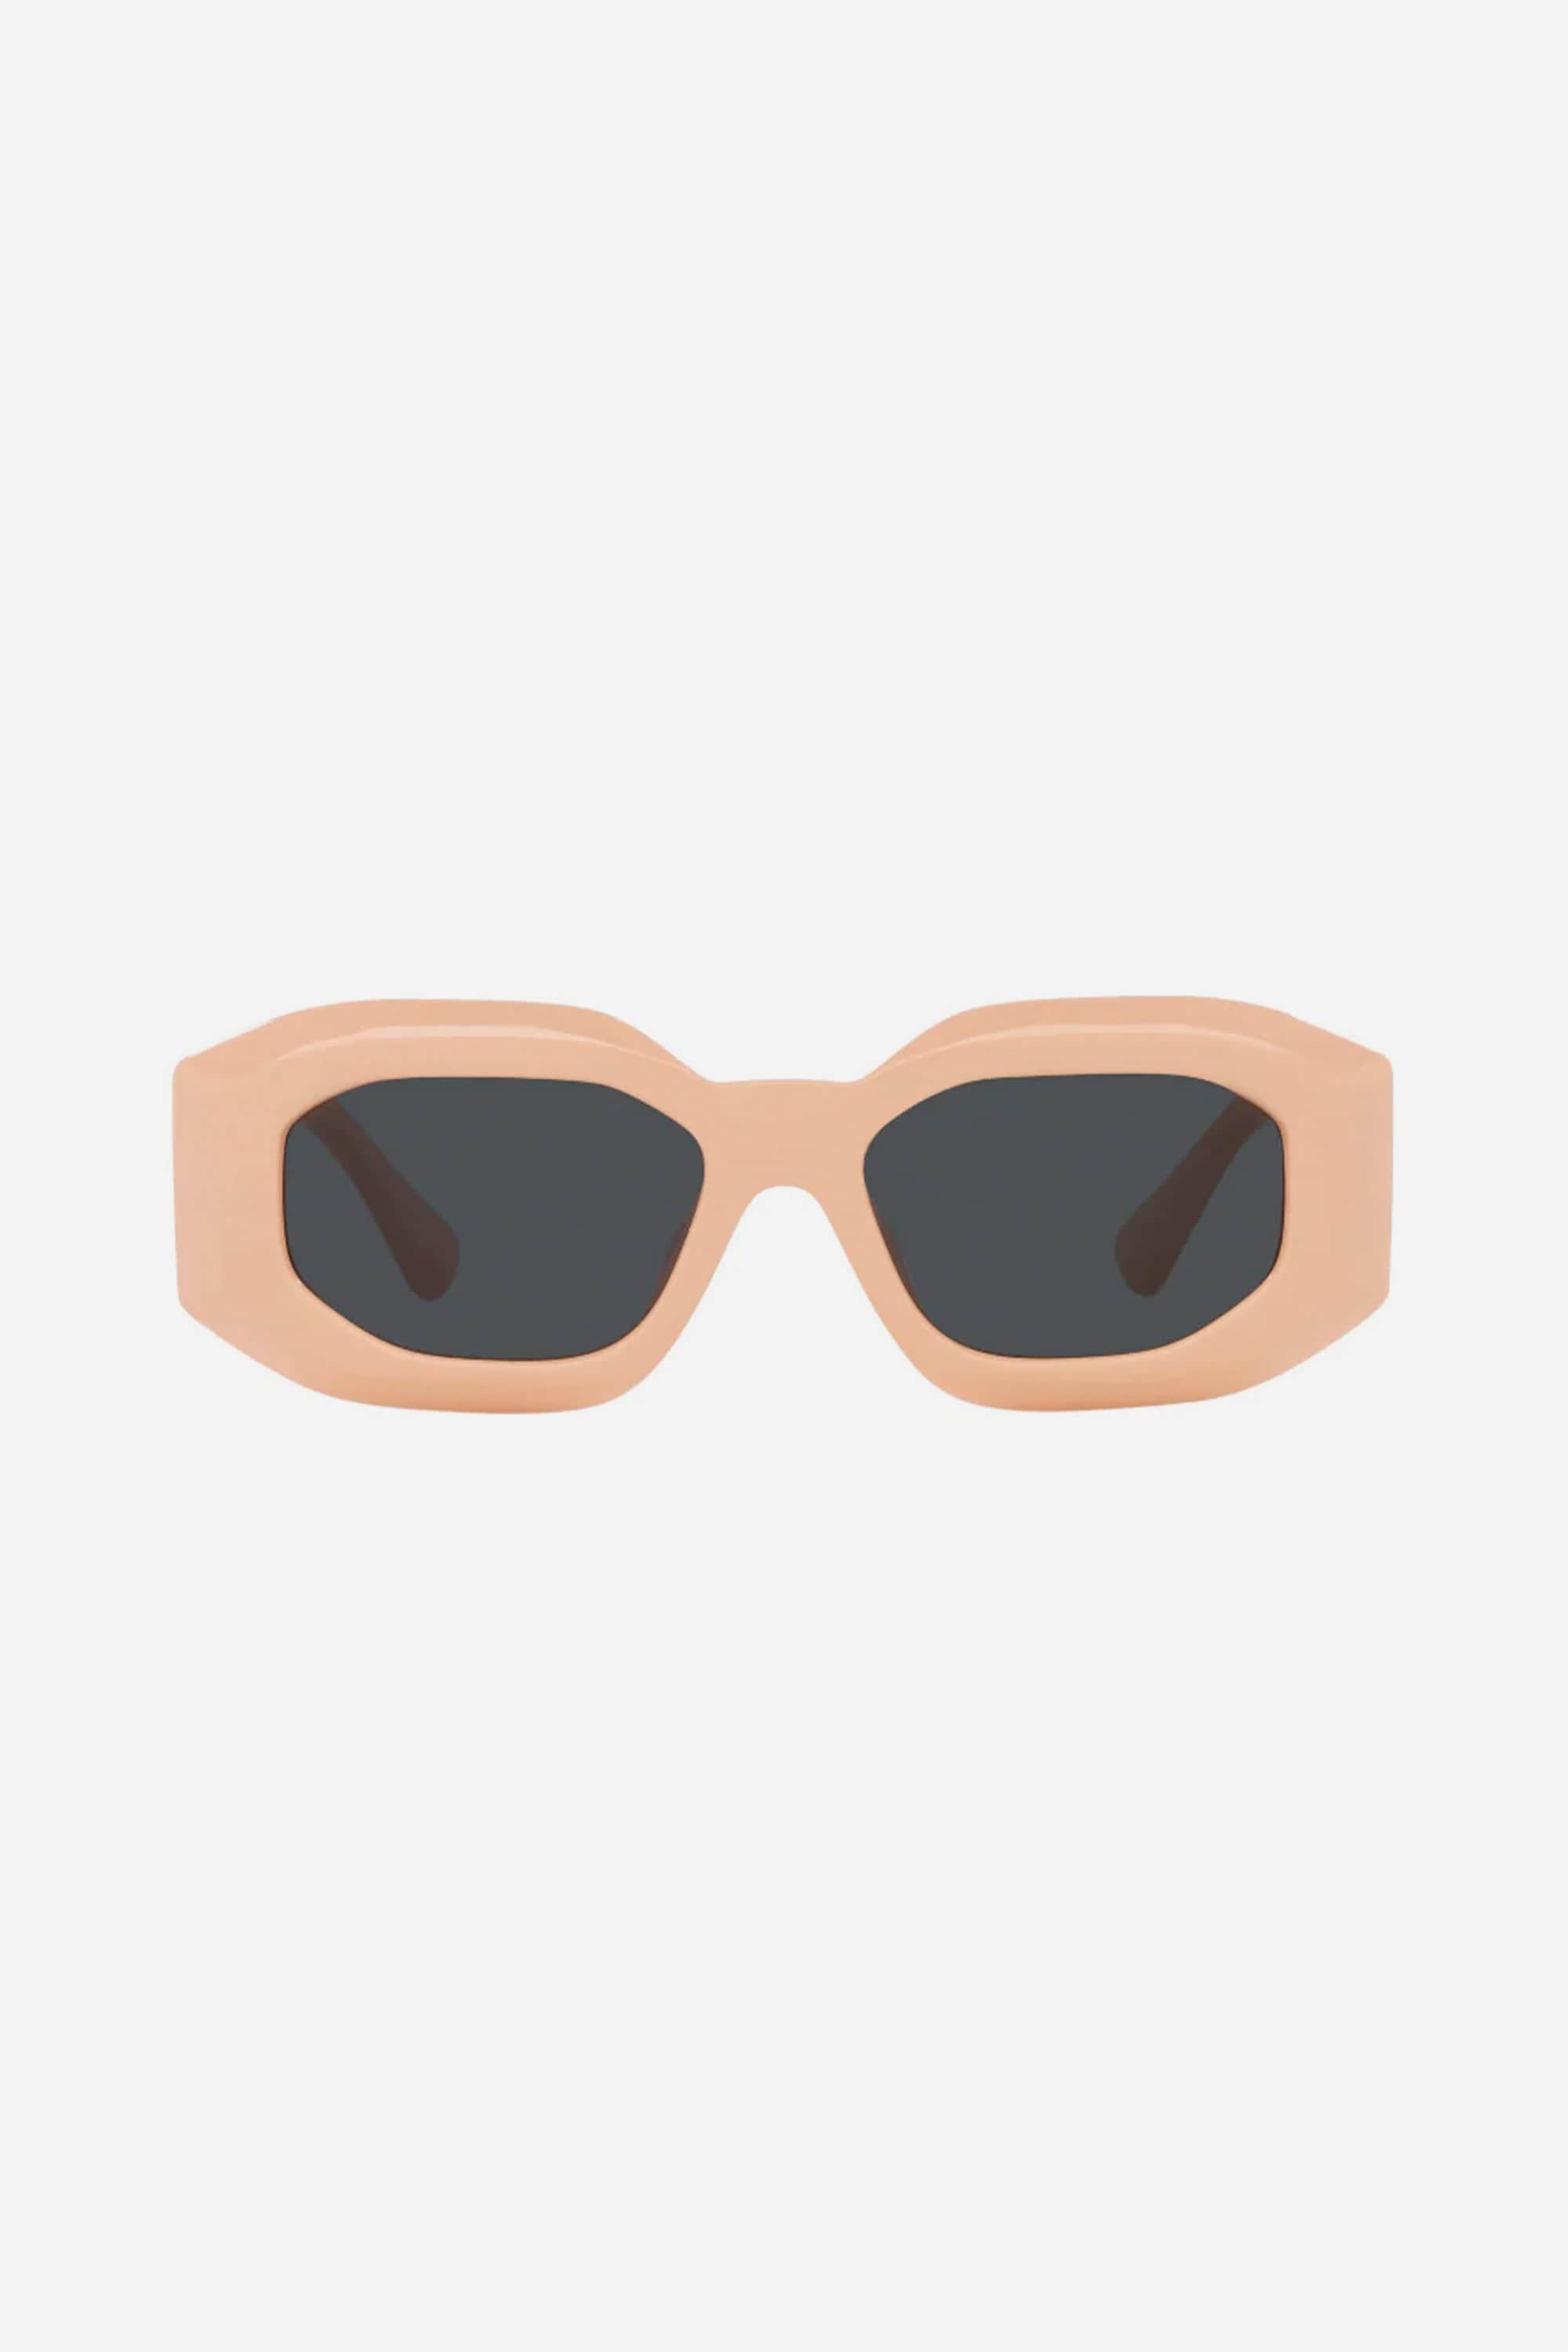 Versace light pink sunglasses with iconic jellyfish - Eyewear Club